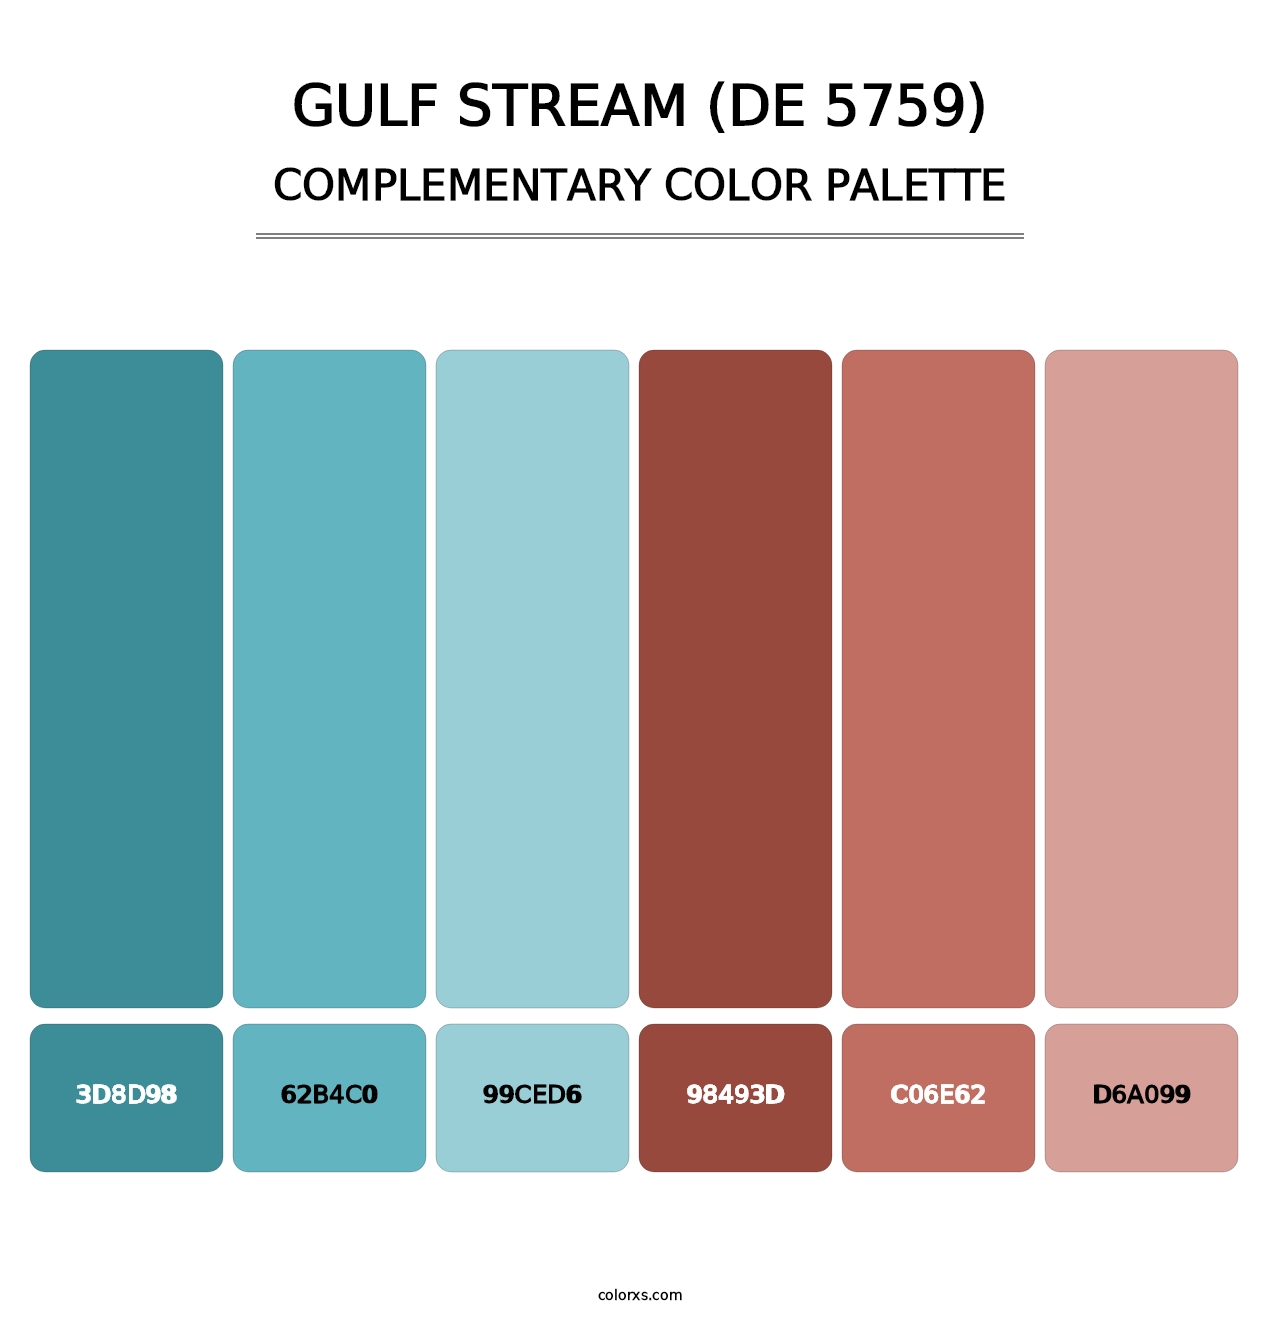 Gulf Stream (DE 5759) - Complementary Color Palette